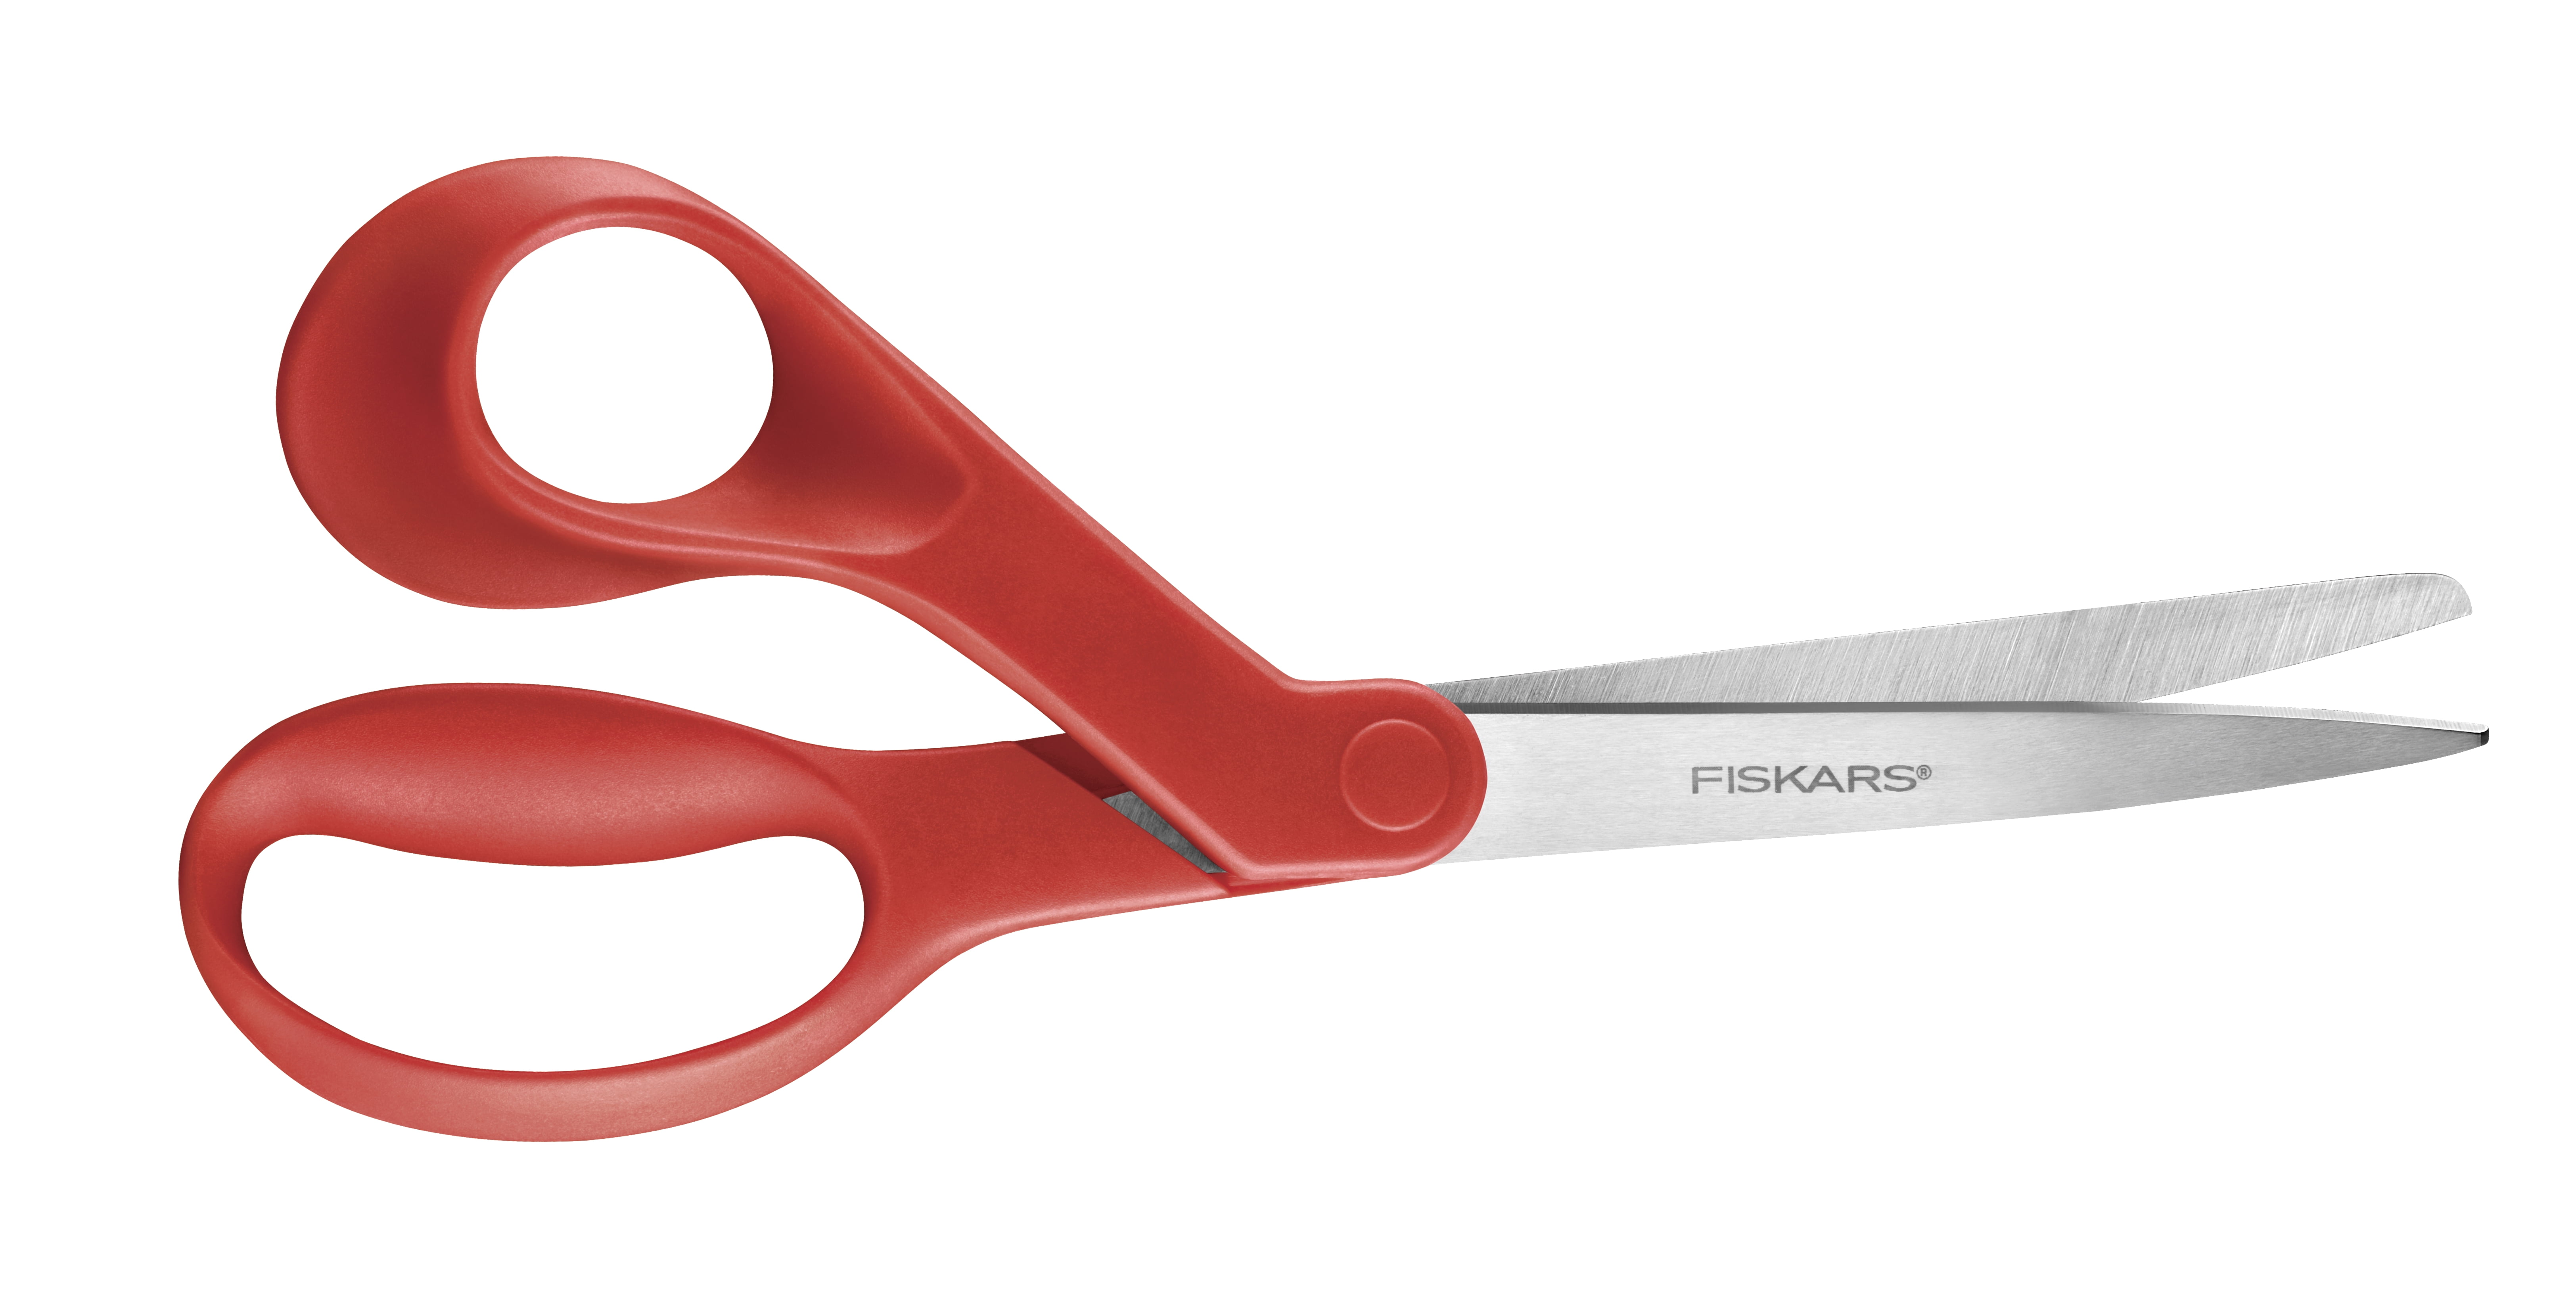 Fiskars All-Purpose Scissors 8 - NOTM695042